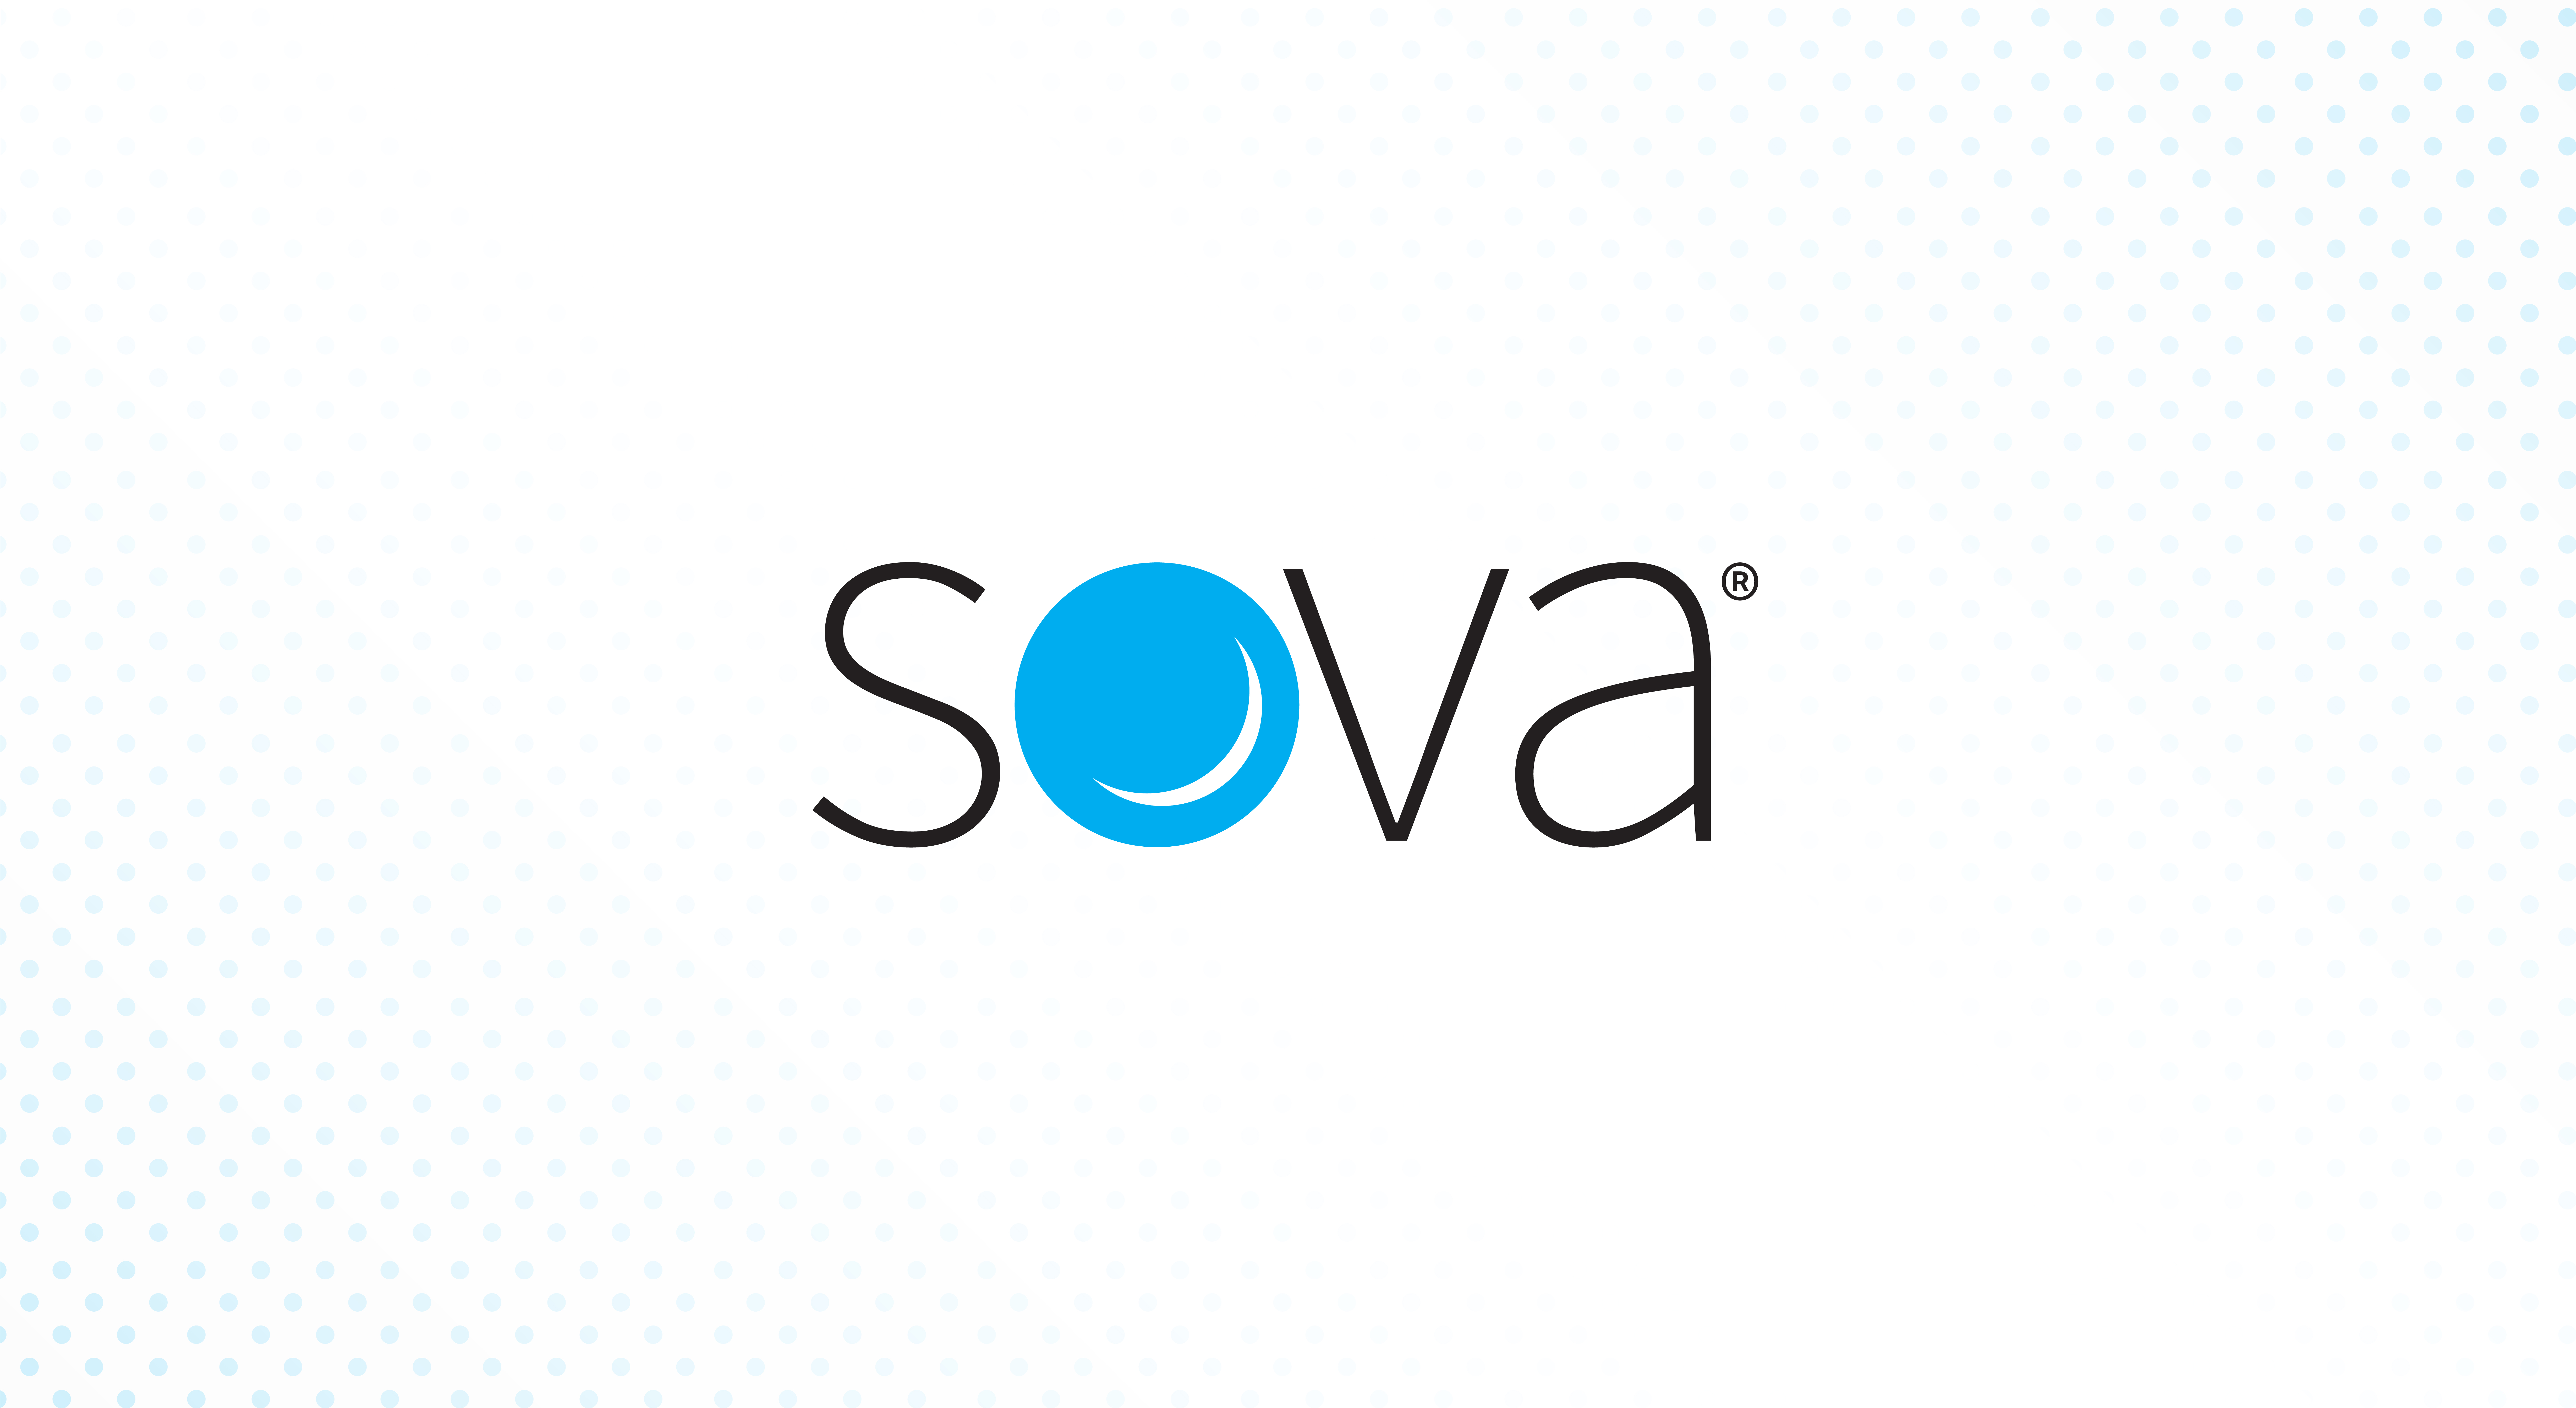 sova-logos-01